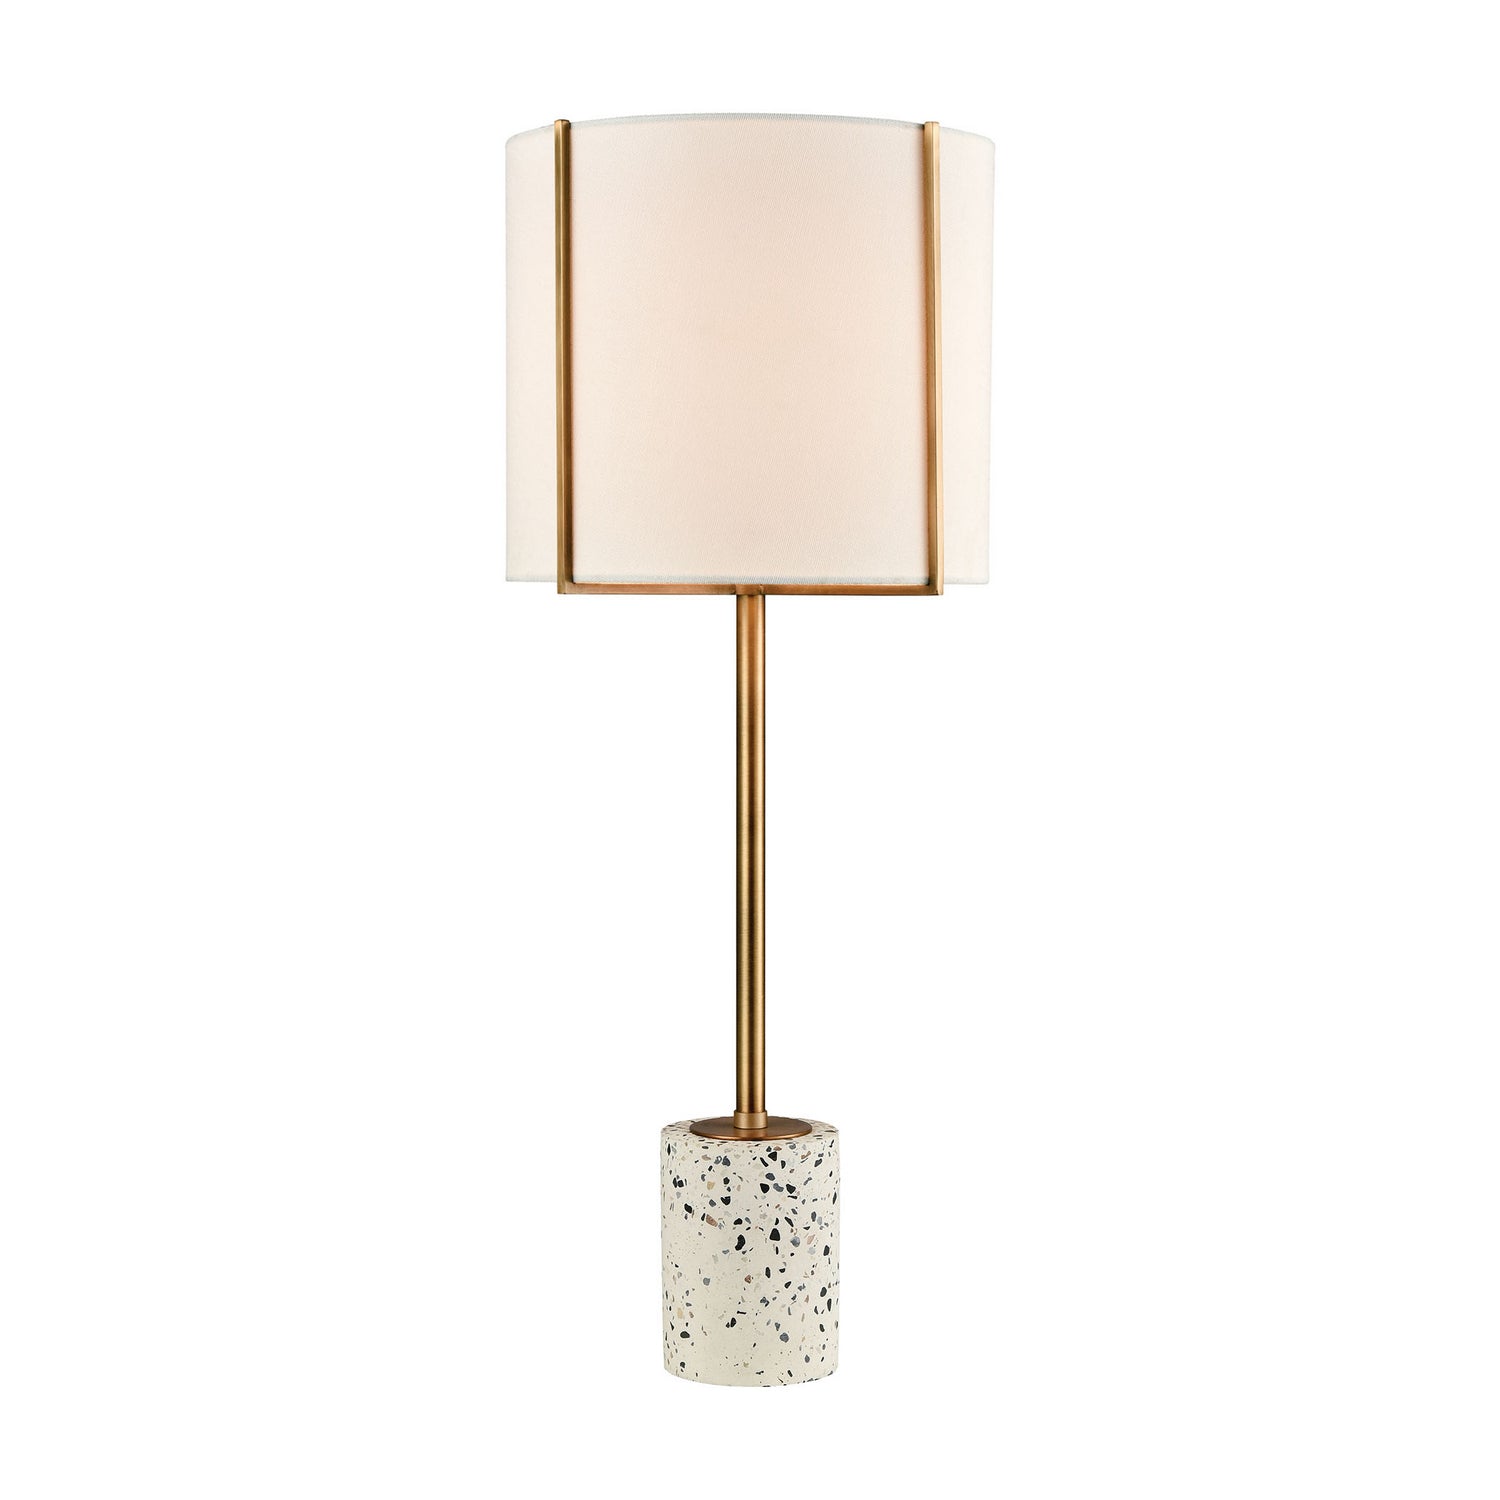 ELK Home - D4551 - One Light Table Lamp - Trussed - White